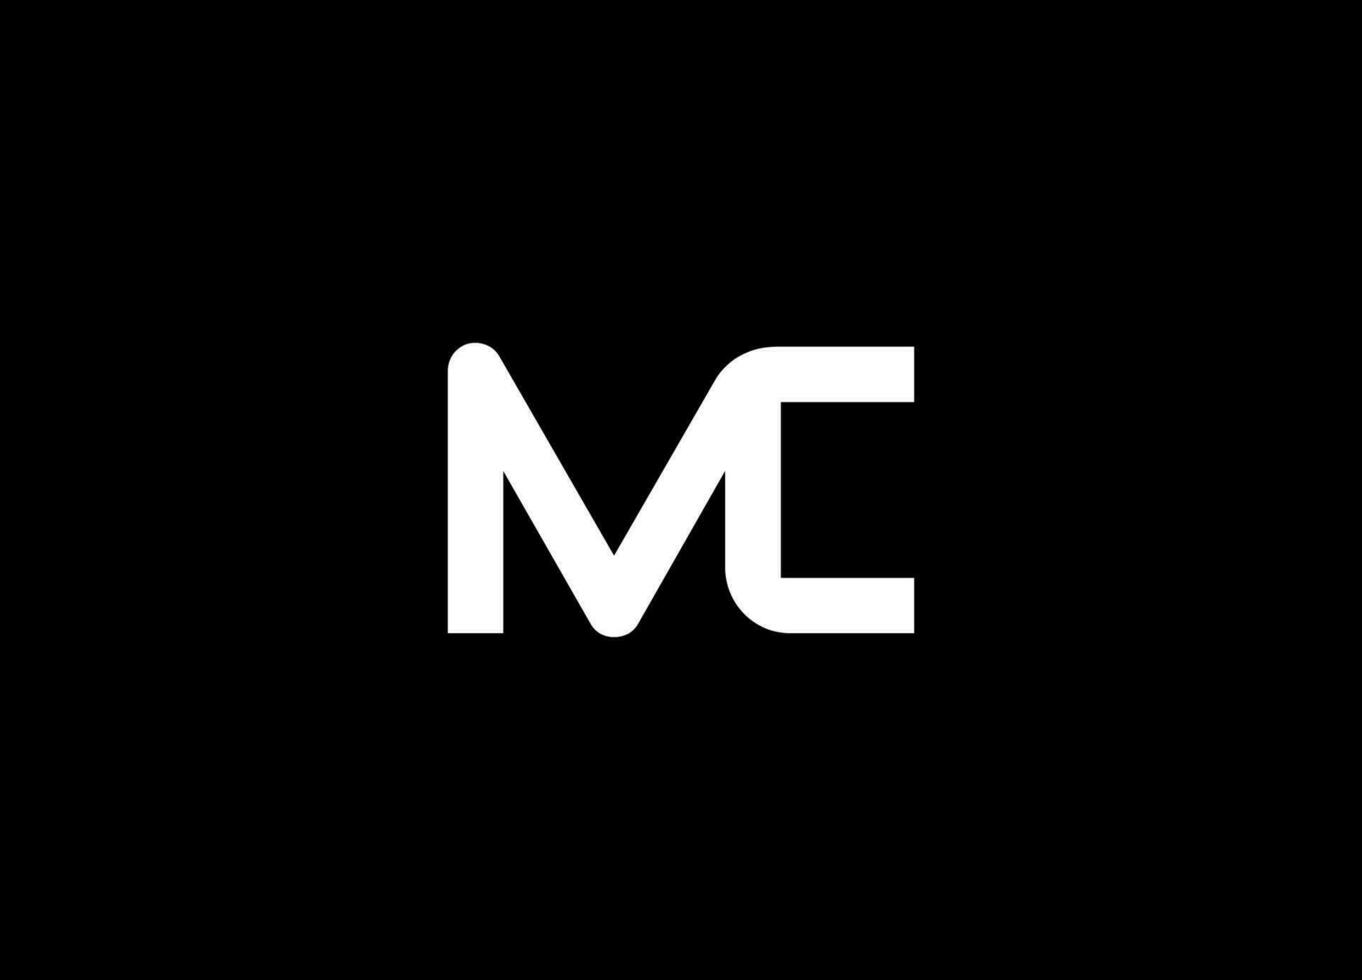 creativo mc letra negocio logo diseño alfabeto icono vector monograma. mc logo diseño modelo vector gráfico marca elemento. mc vector logo, para empresa tecnología, finanzas, alojamiento, hoteles, etc